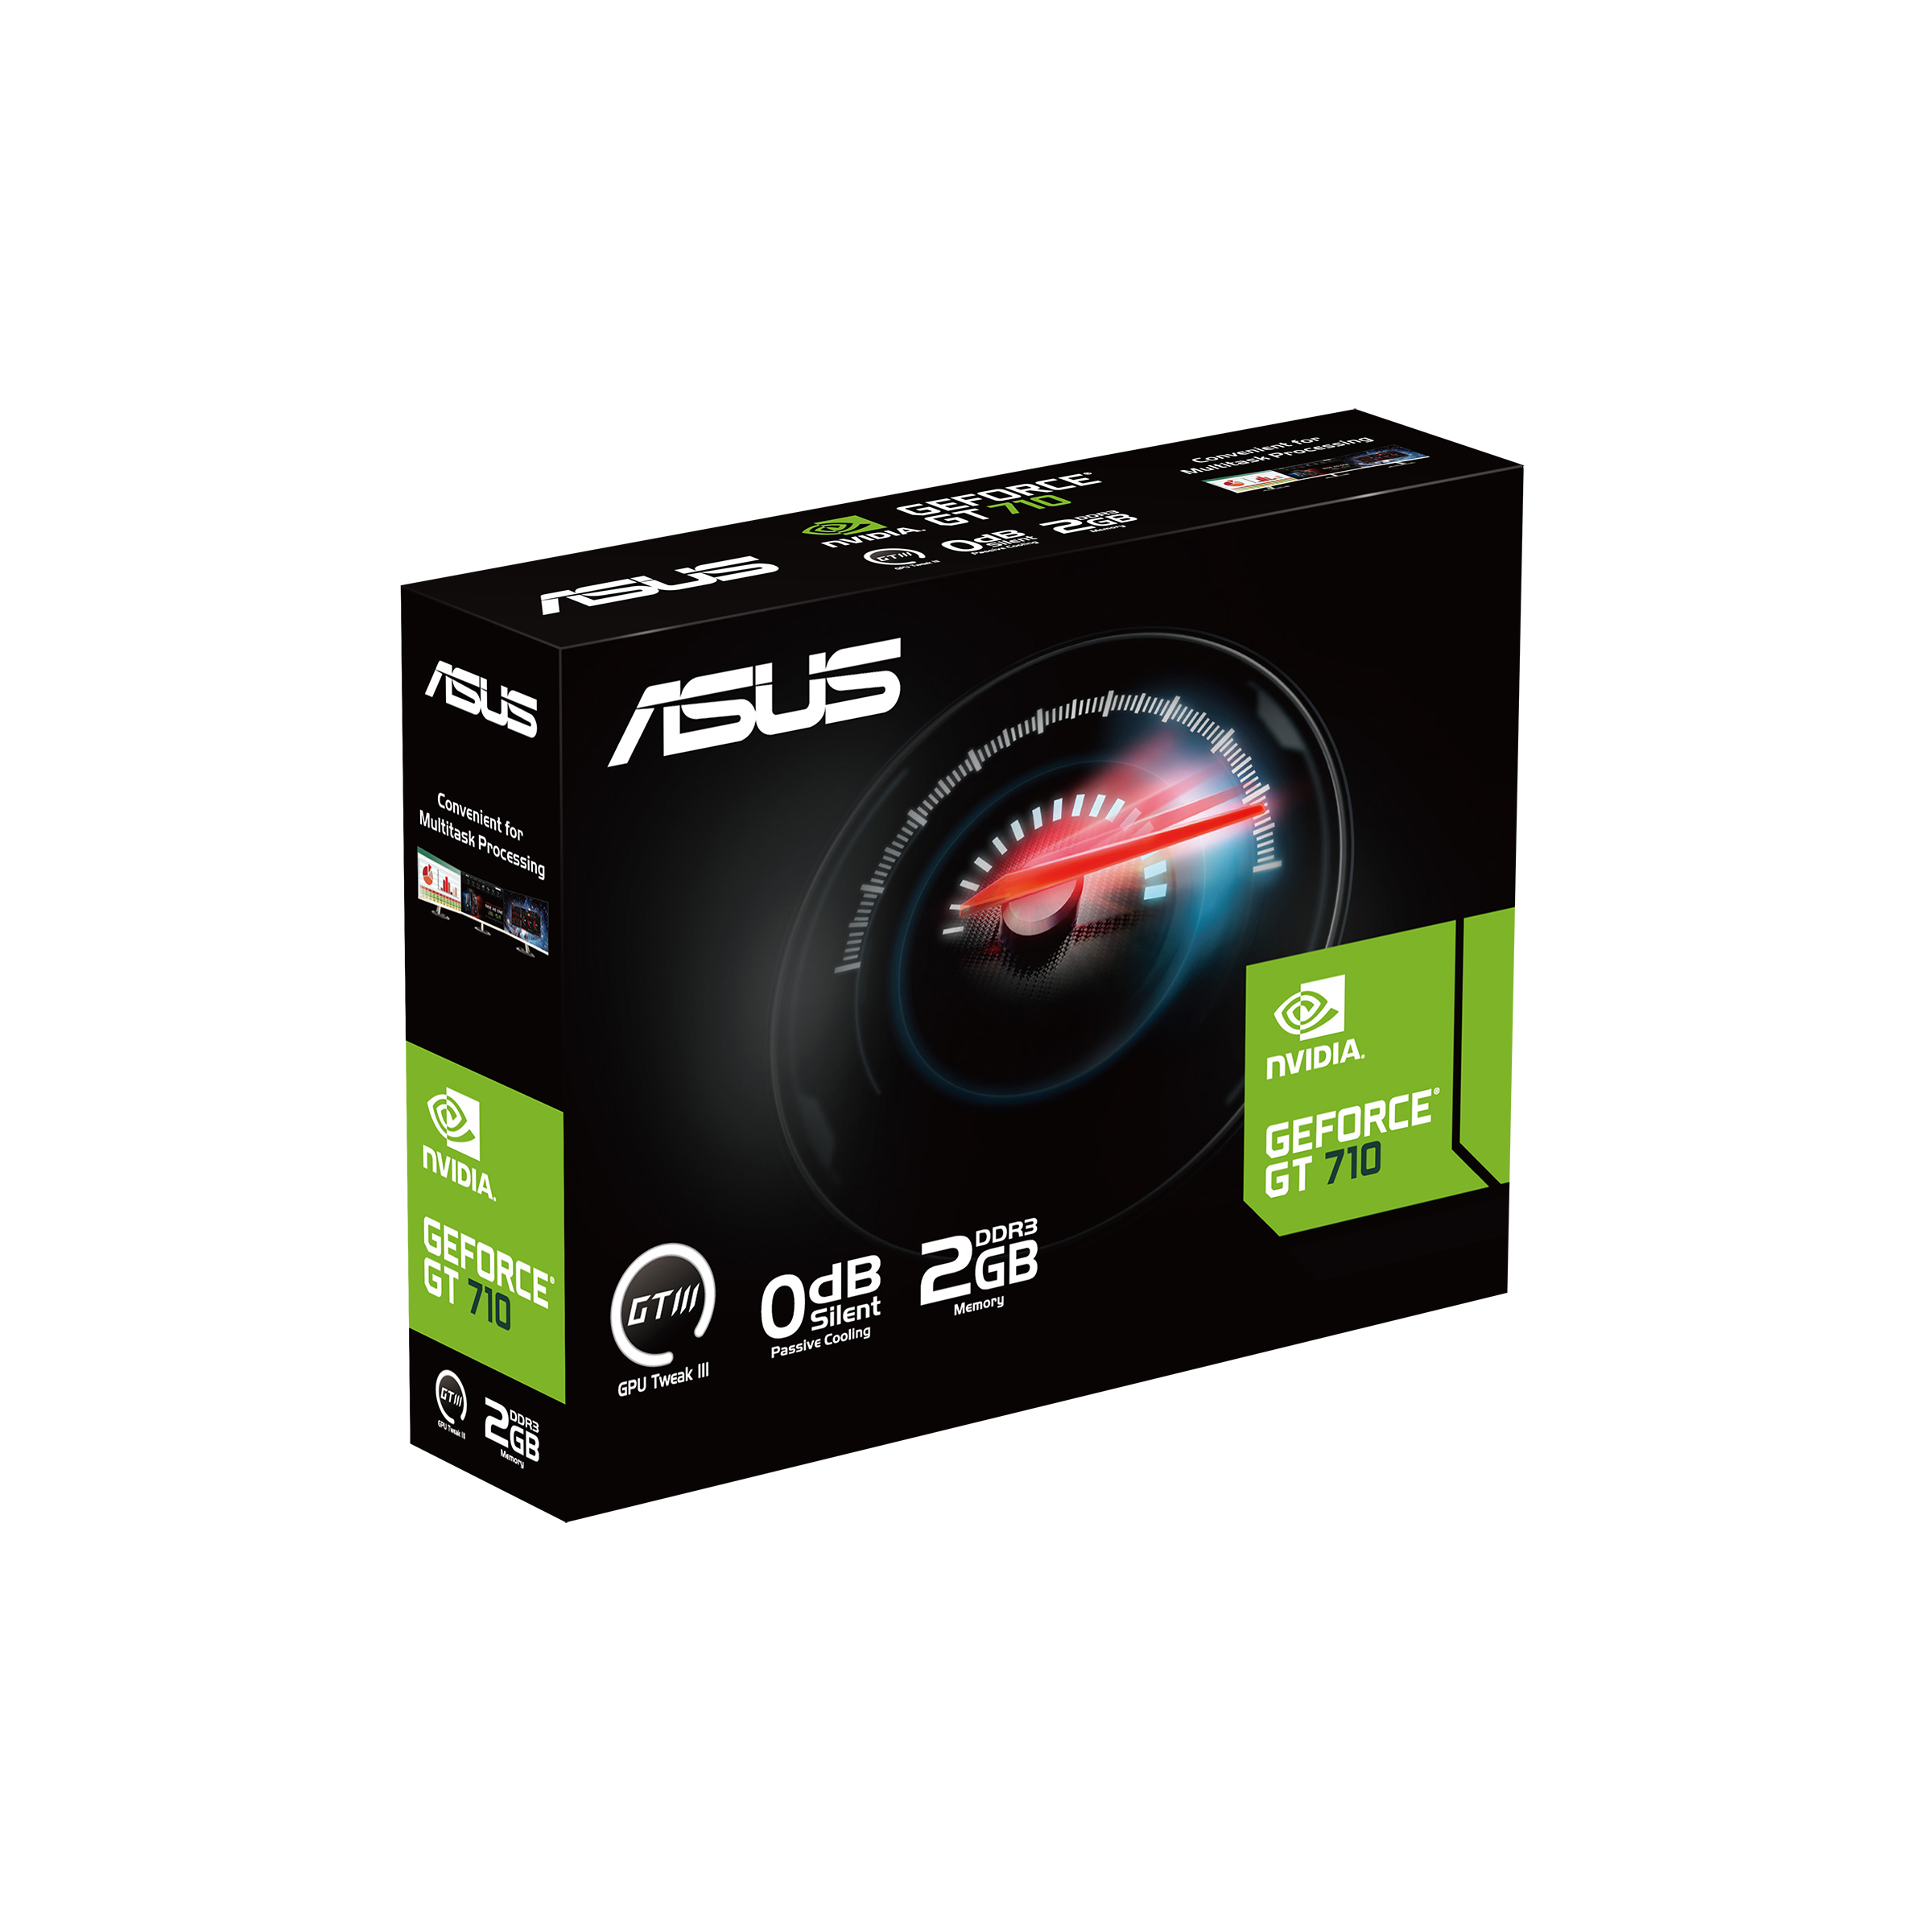 710-1-SL ASUS 1GB Nvidia GeForce GT 710 DDR3 64-Bit VGA/ Dual Link